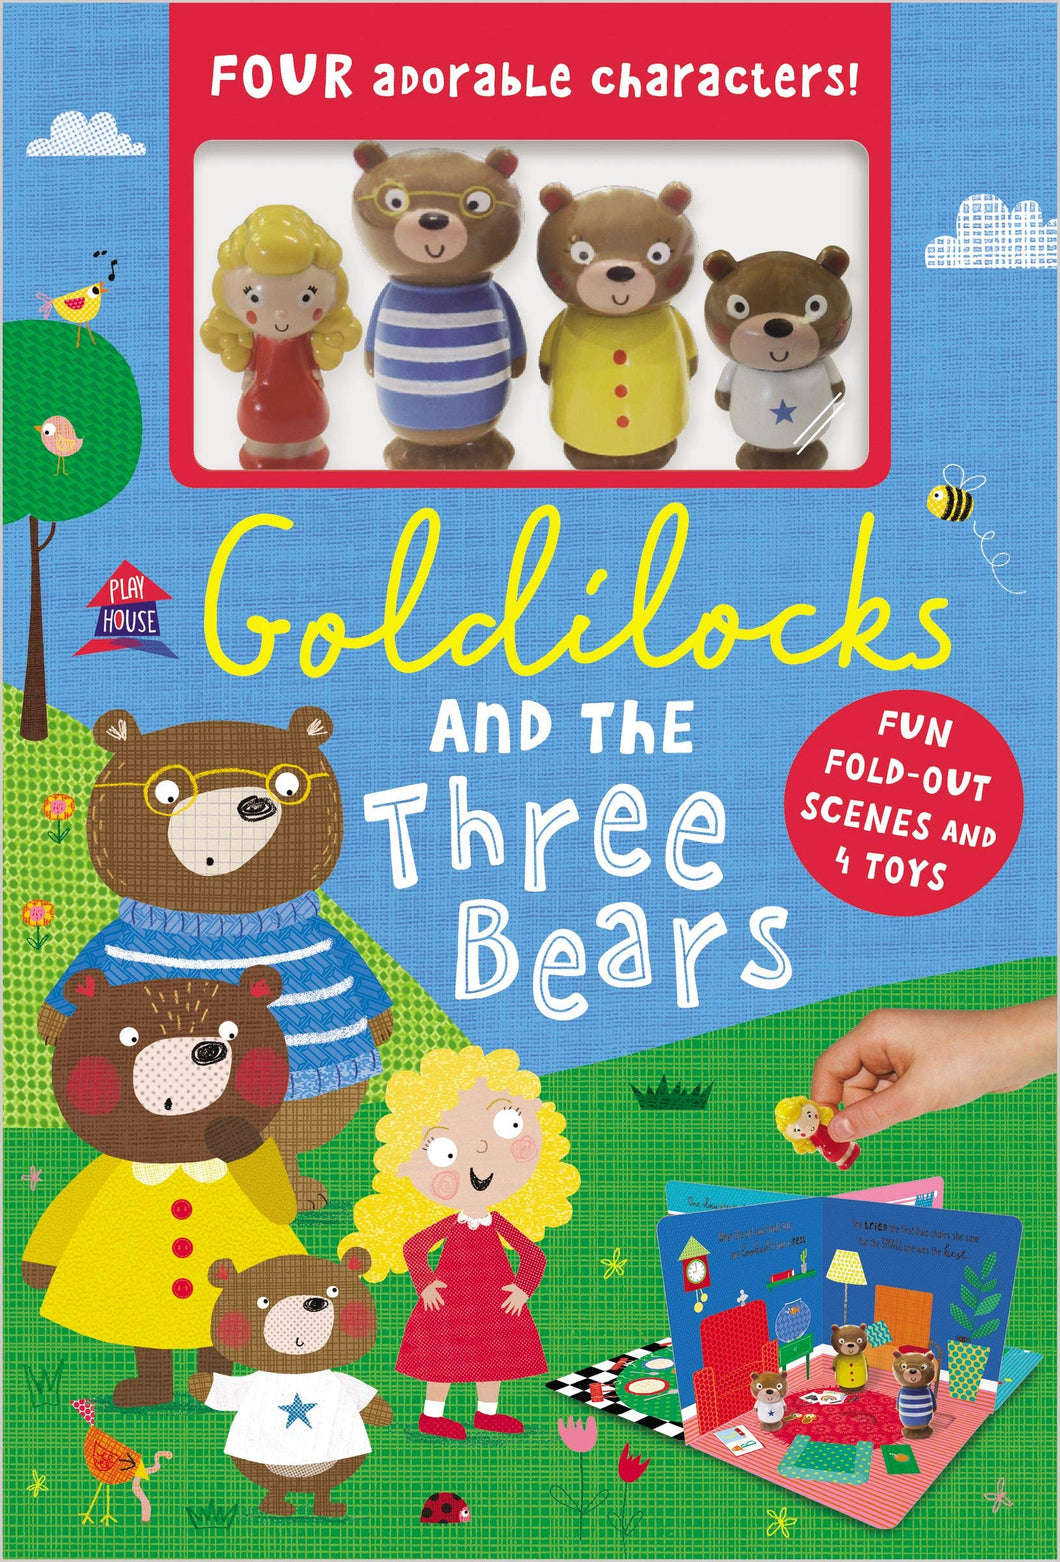 MBI PLAYHOUSE Goldilocks and the Three Bears